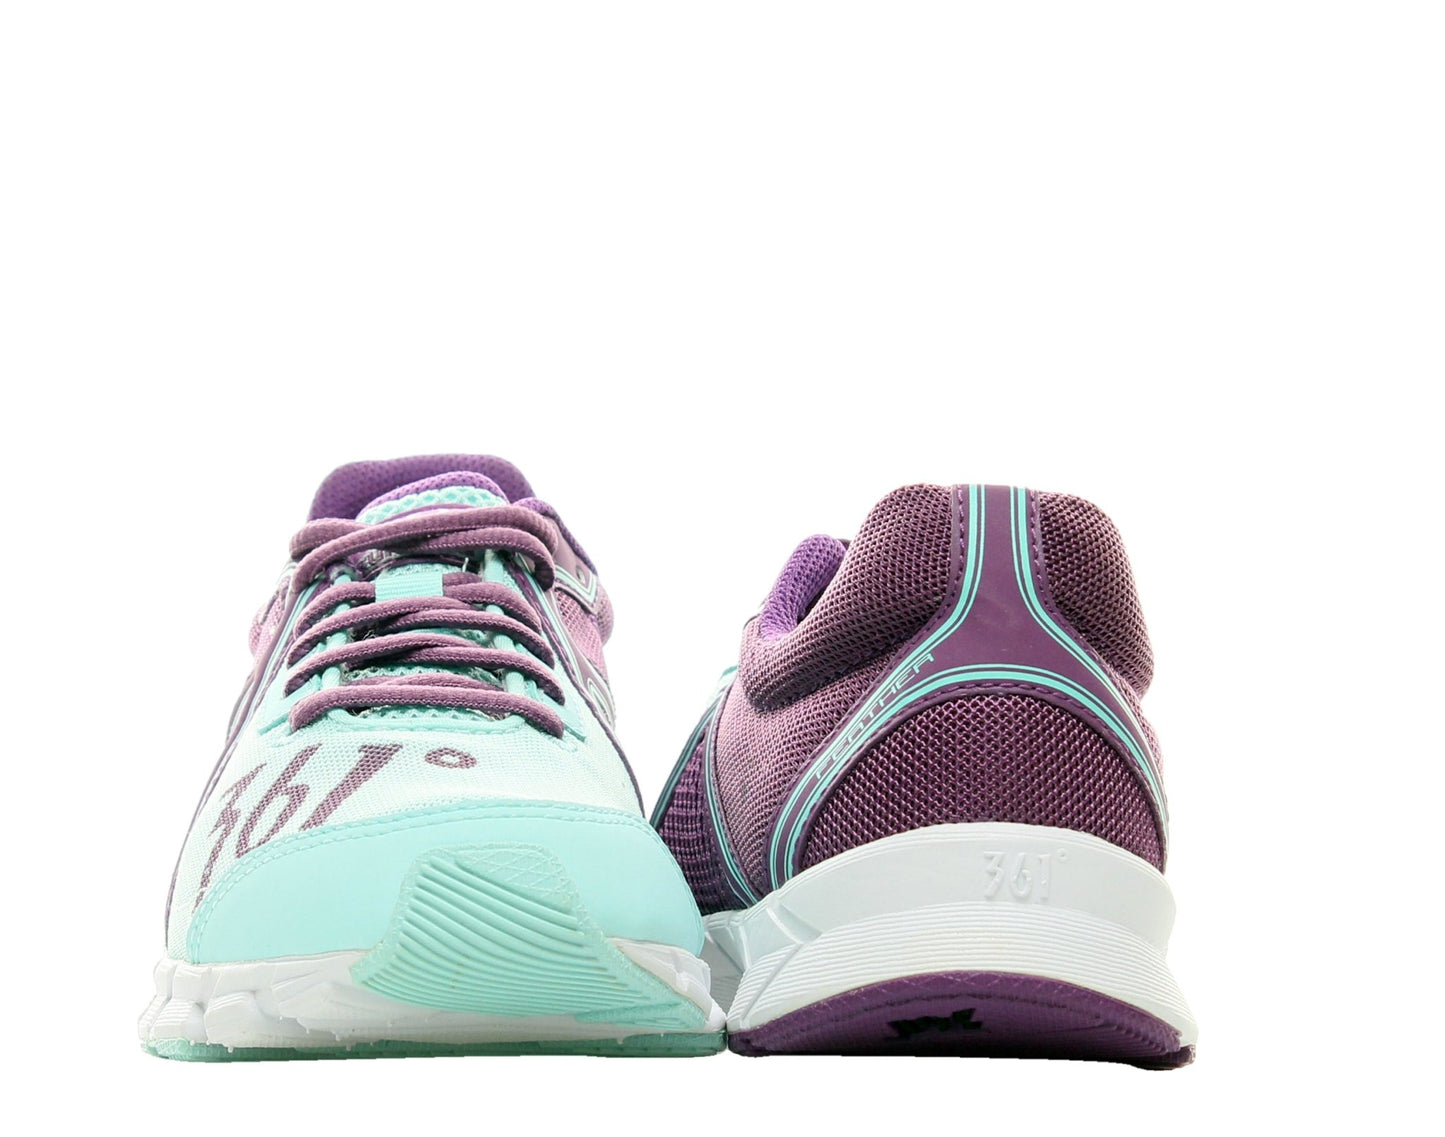 361 Feather Light Blue/Sunset Purple Women's Running Shoes 201420105-6005 - Becauze